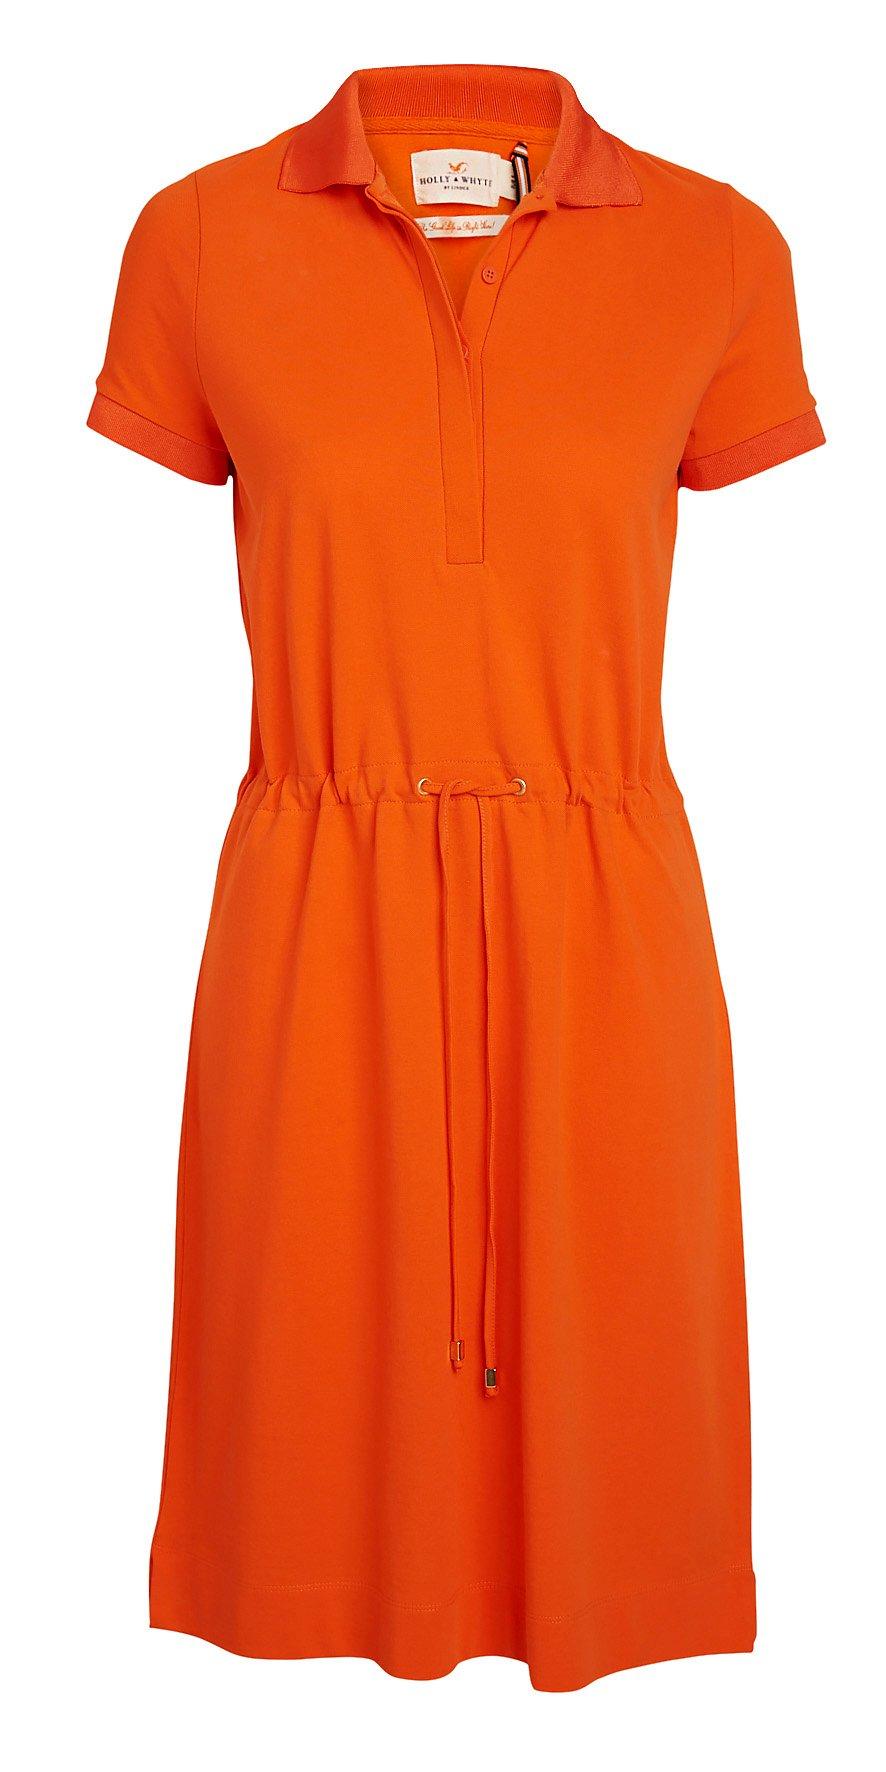 orange polo dress